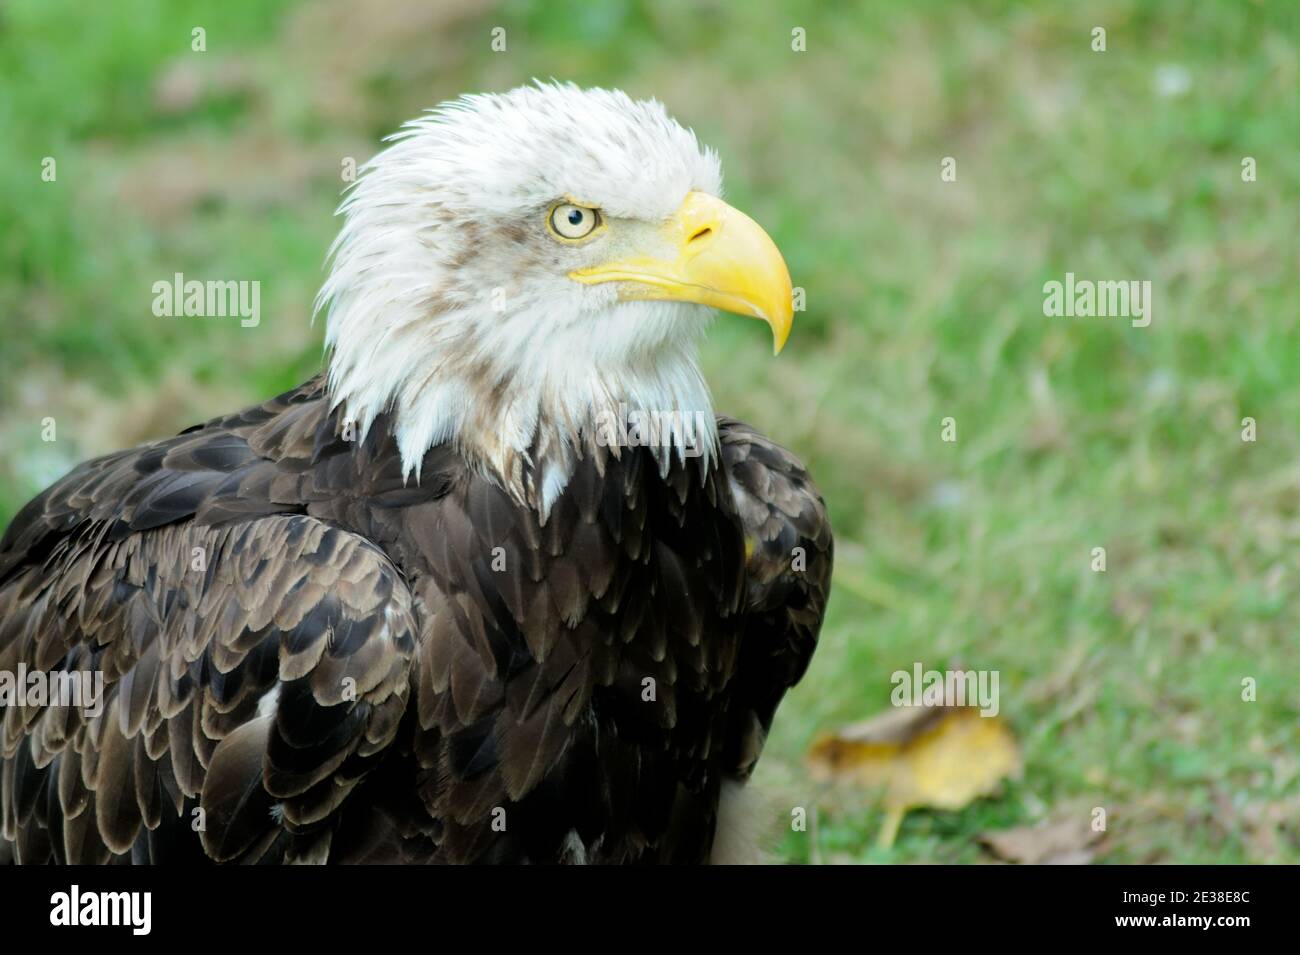 An American Bald Eagle portrait. Stock Photo